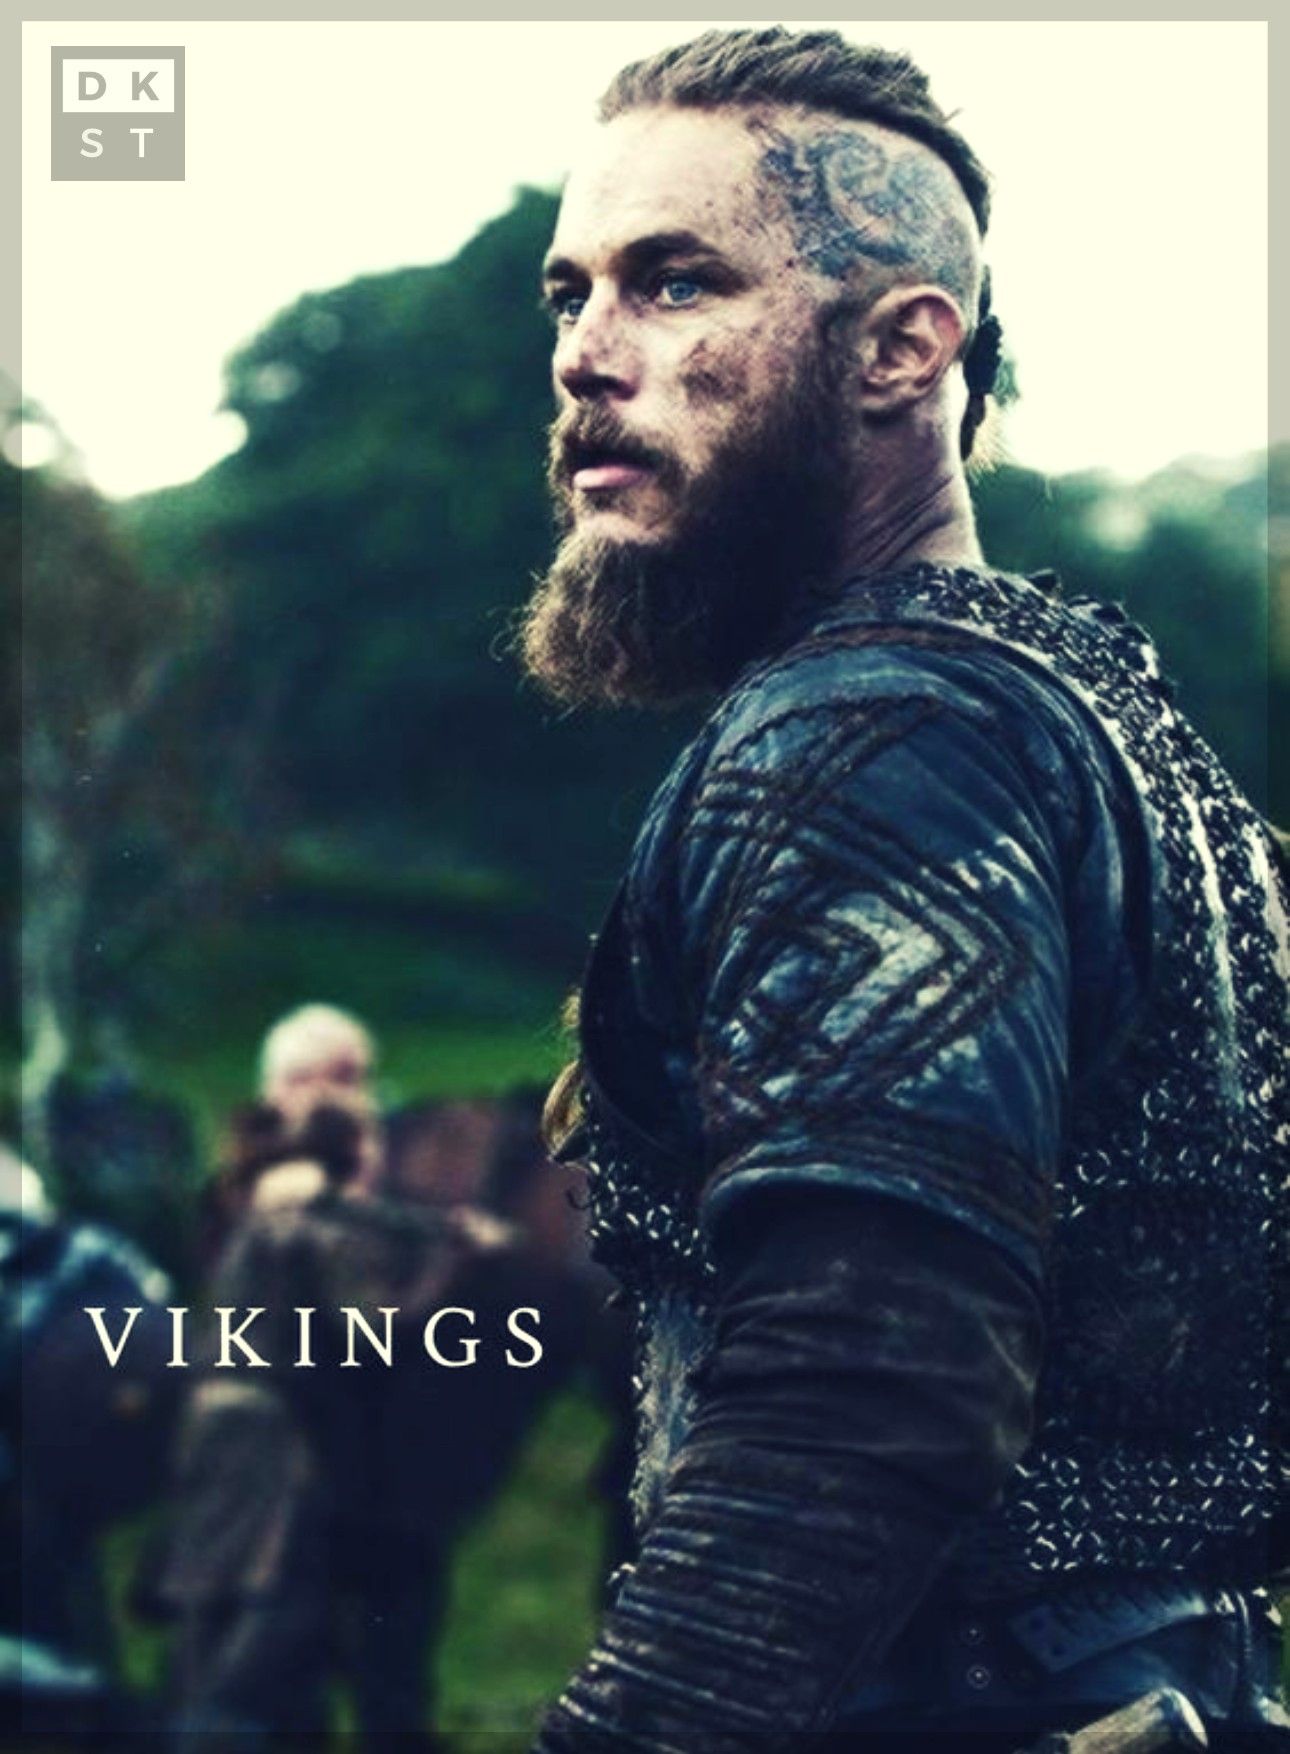 Legendary Vikings: Ragnar Lothbrok